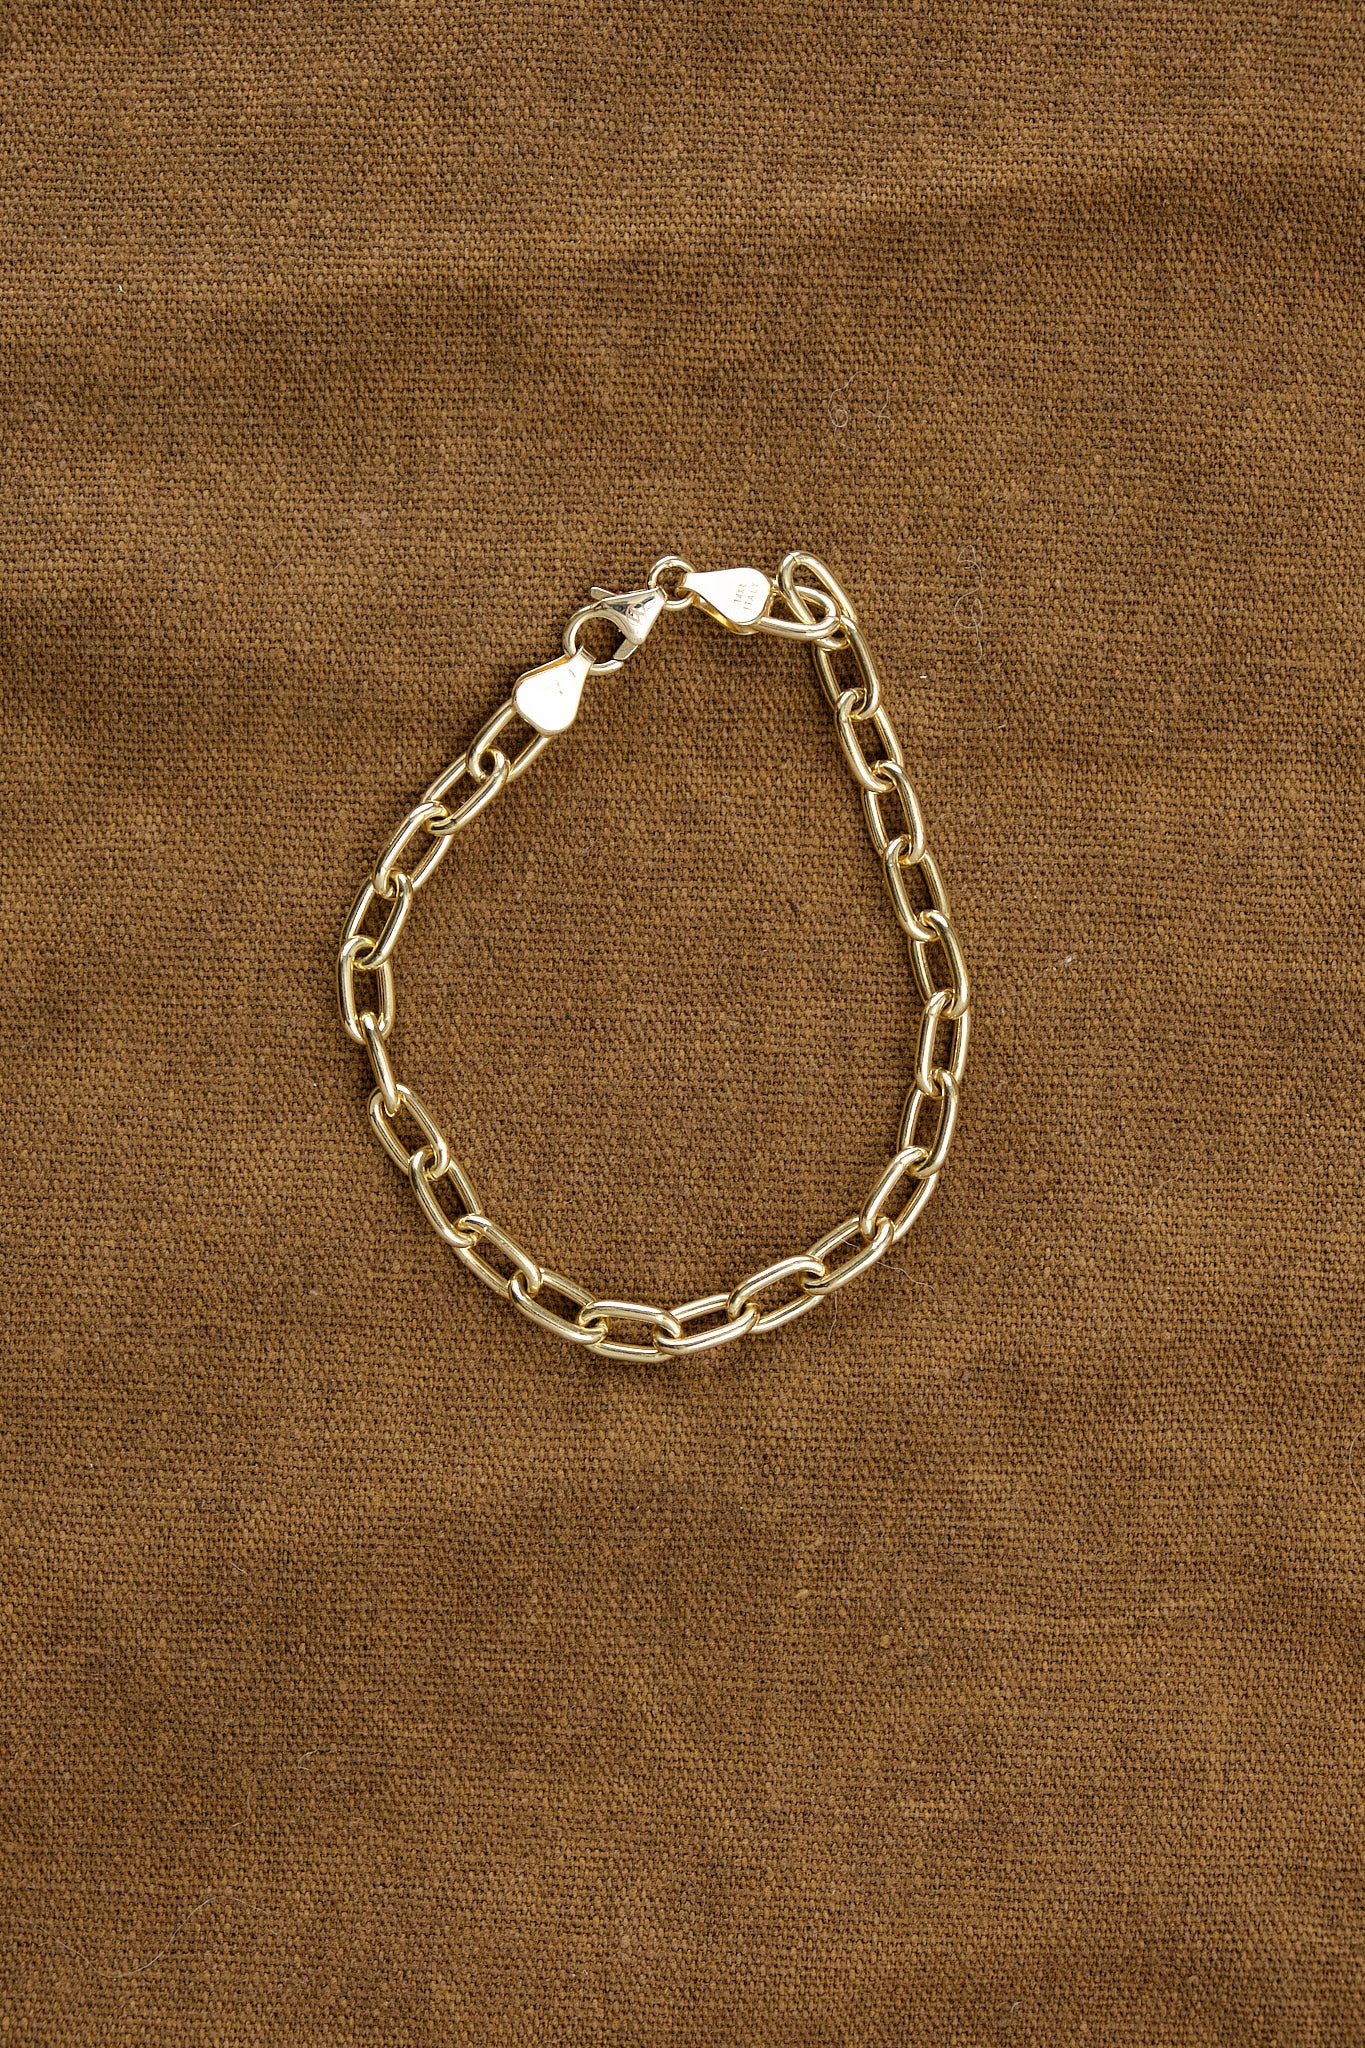  Solid Oval Link Chain Bracelet Stephanie Windsor